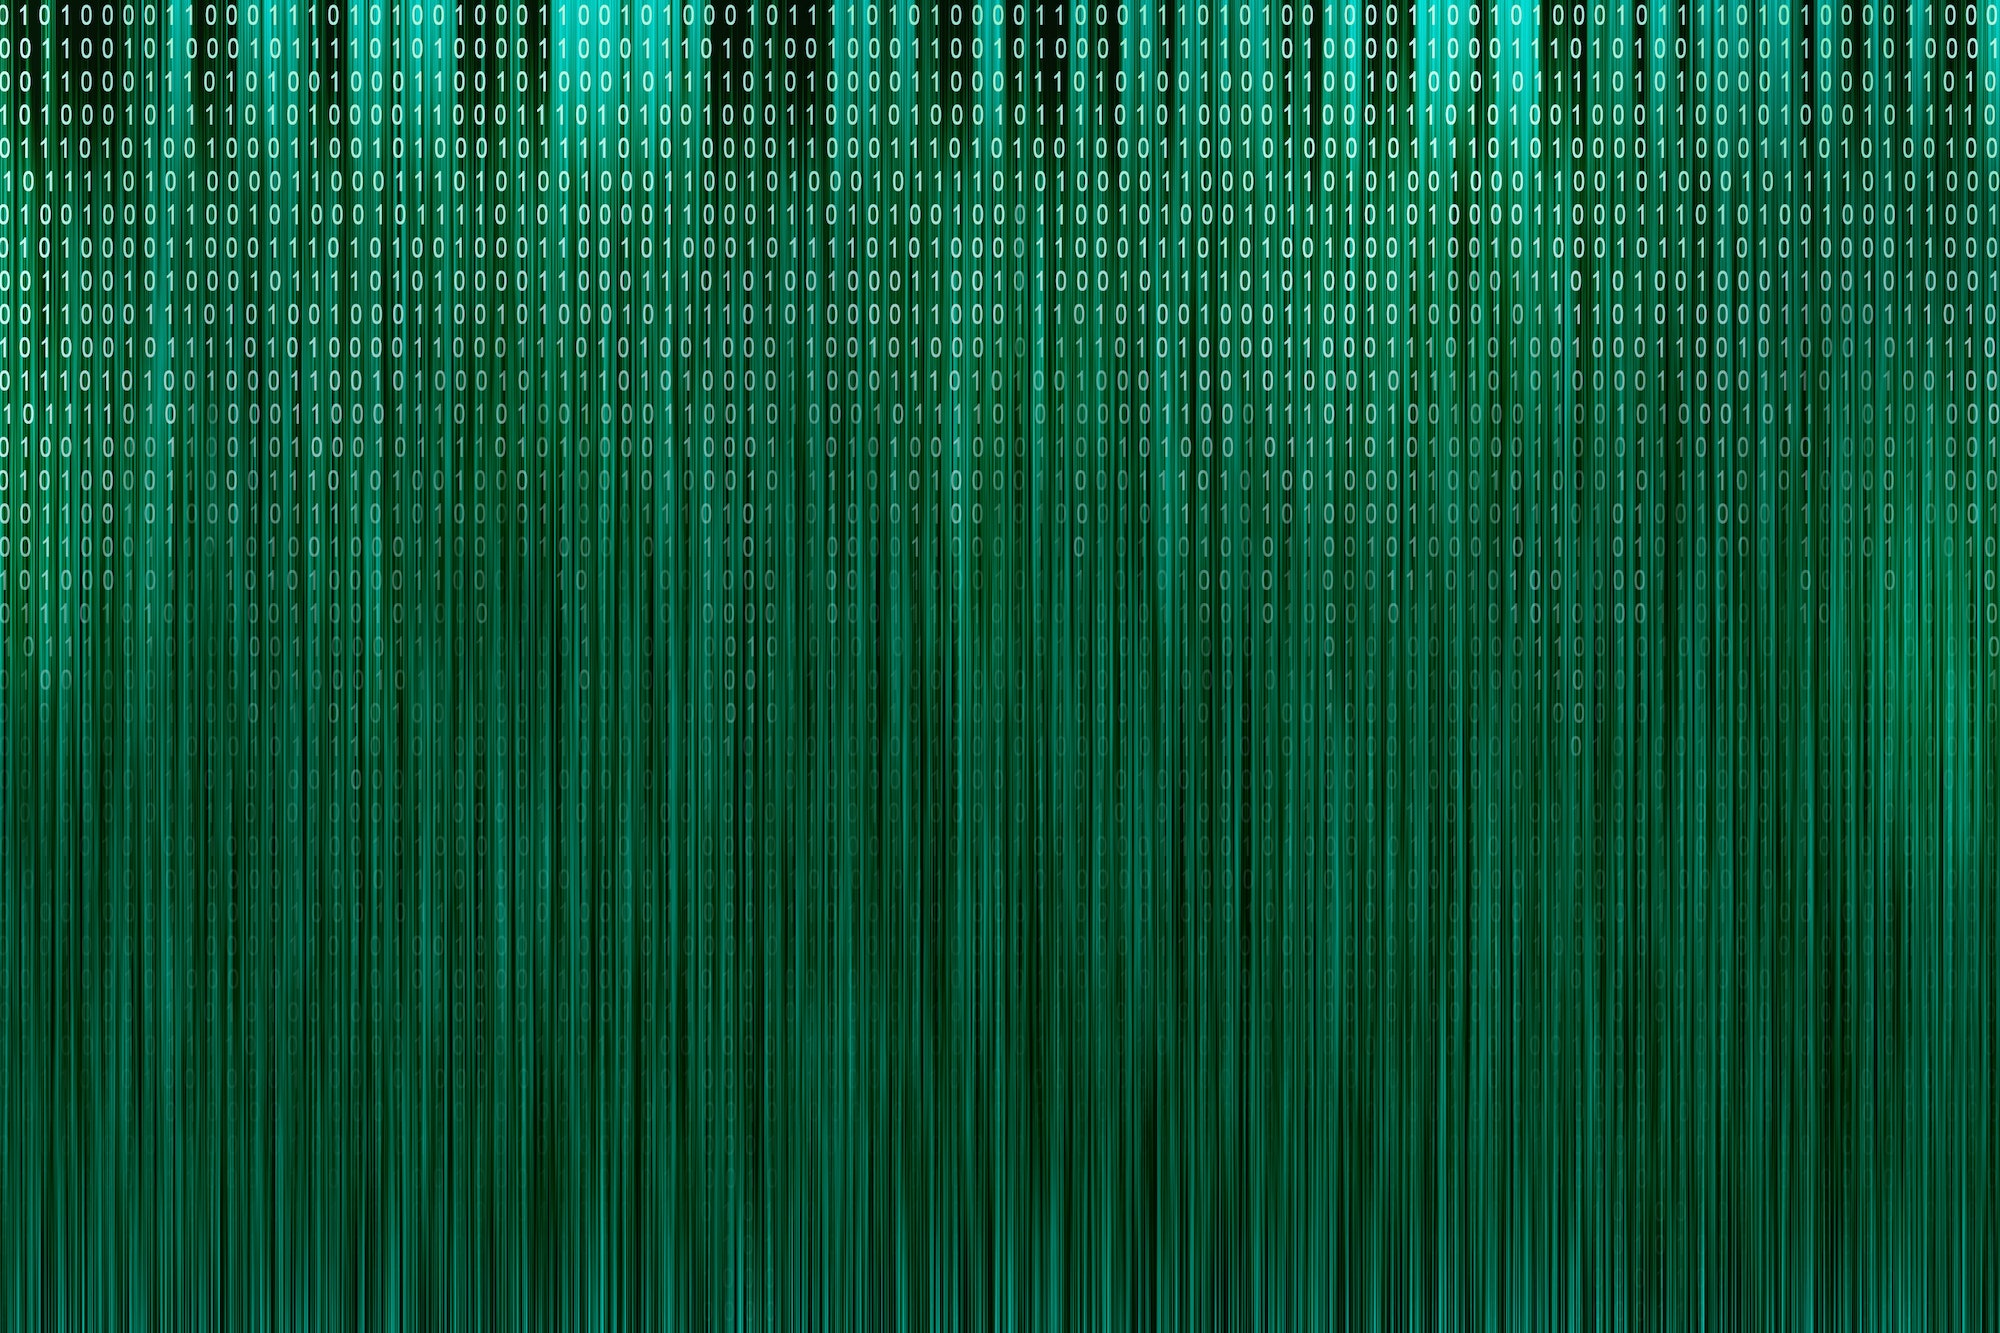 Green digital matrix data background